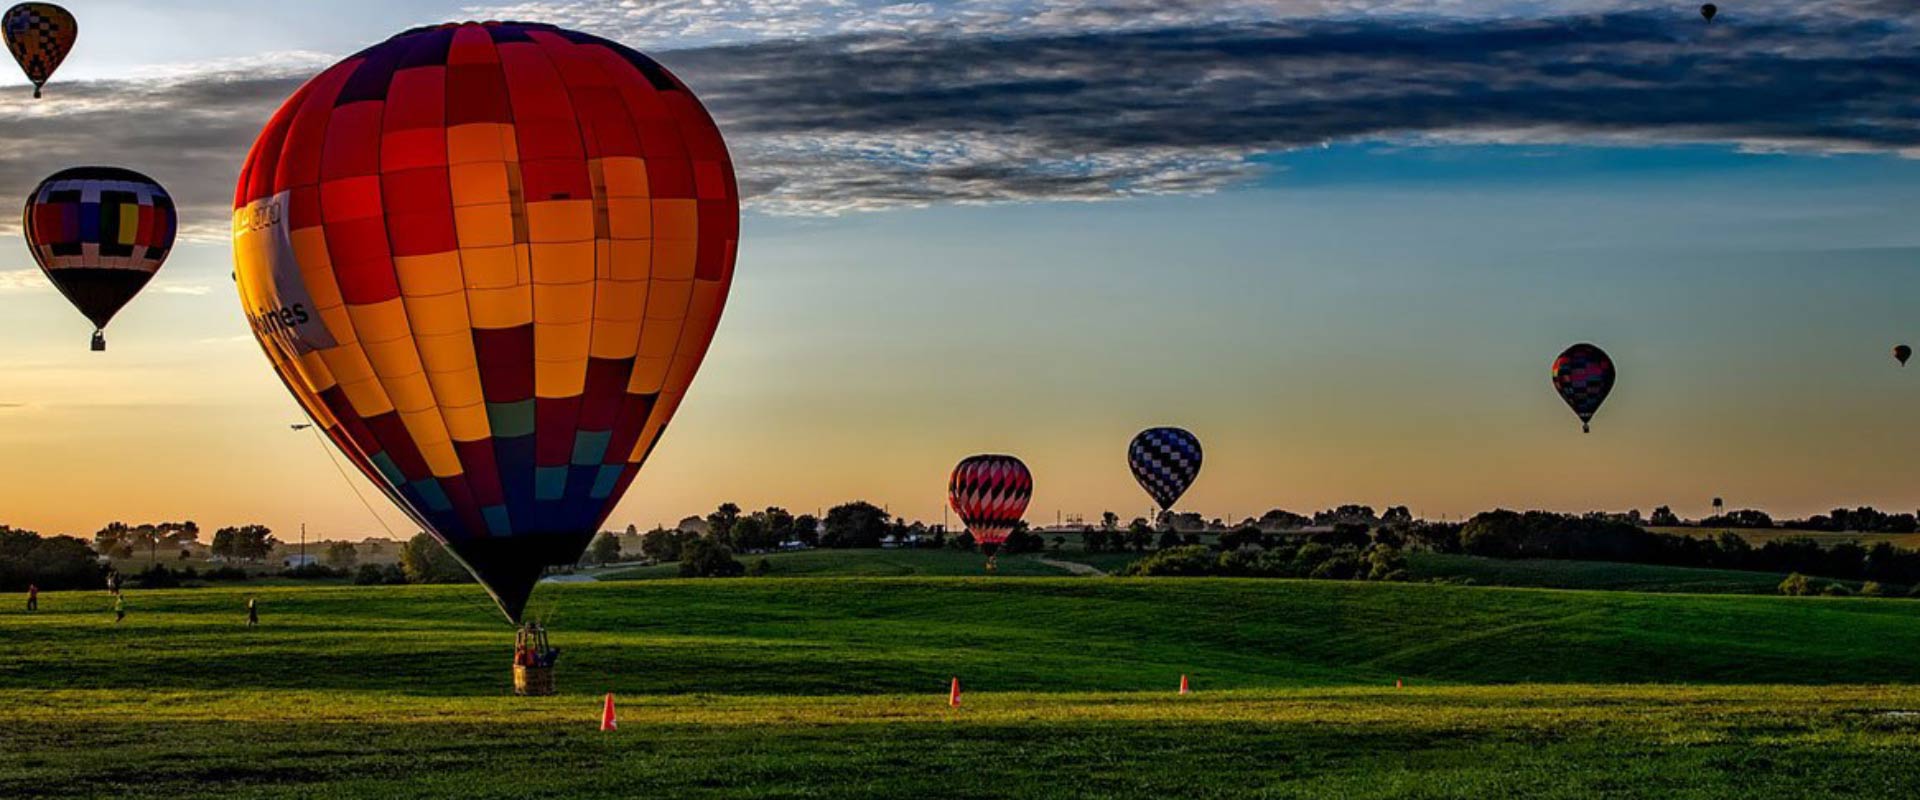 Uptuit Balloons’ Hot Air Balloon Fleet